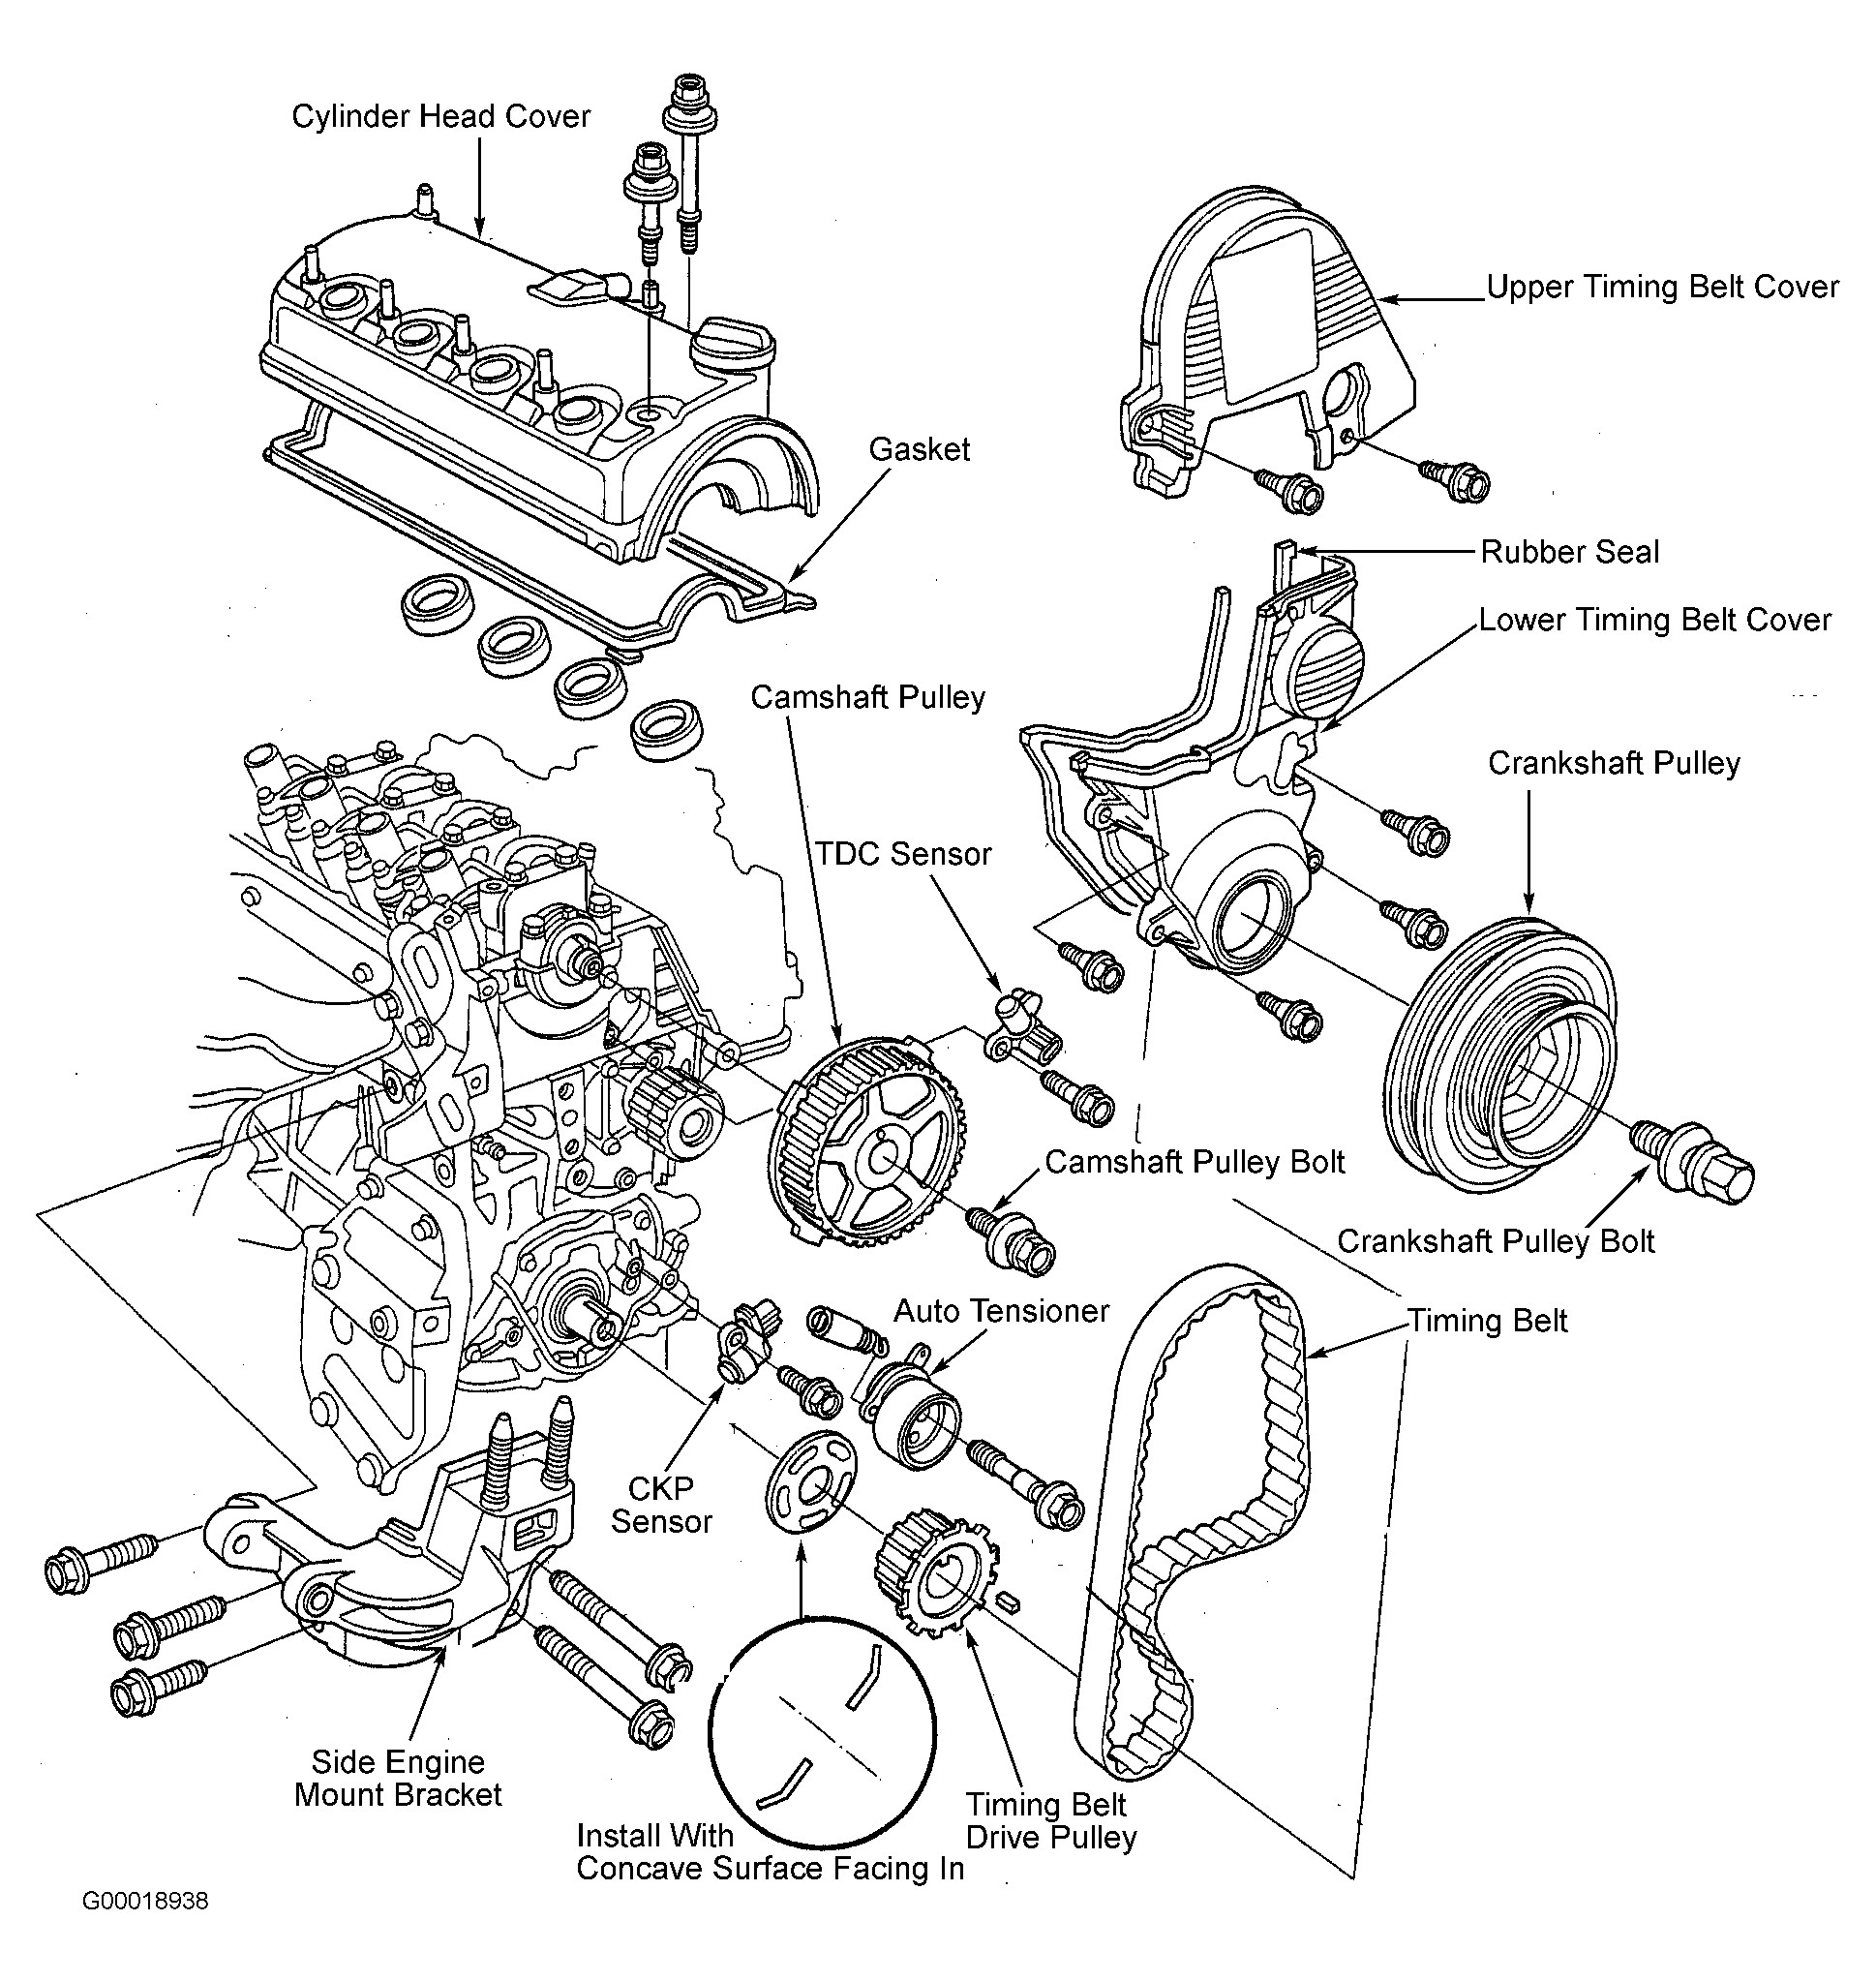 Honda Gc160 Parts Diagram Honda Civic Parts Diagram Wonderful Likeness Serpentine and Timing Of Honda Gc160 Parts Diagram